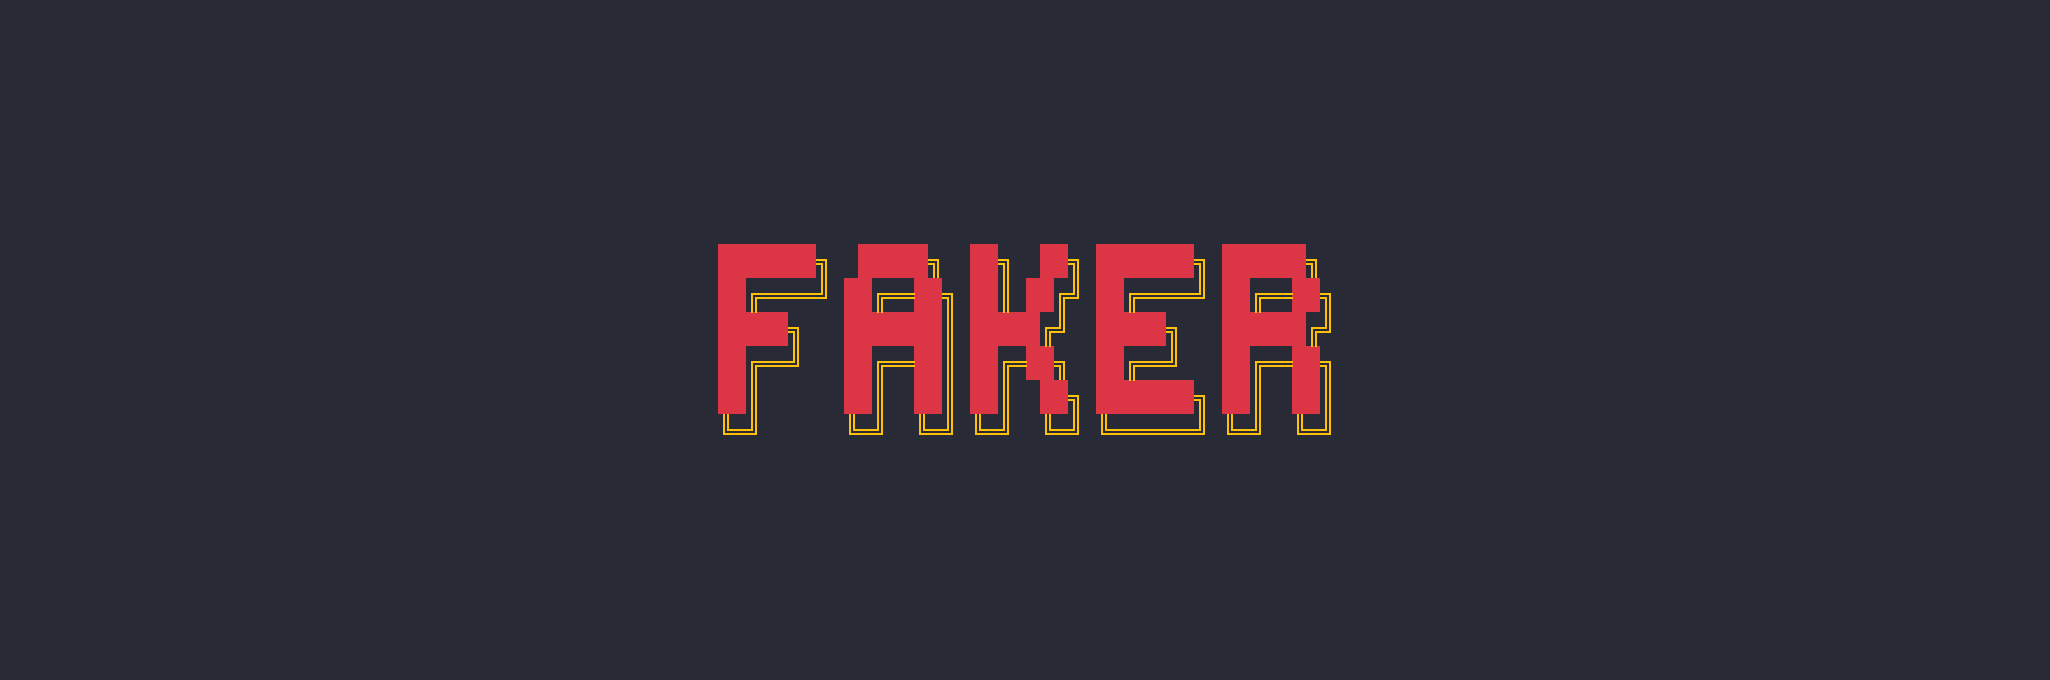 Faker.js Data Generator: My New Hero